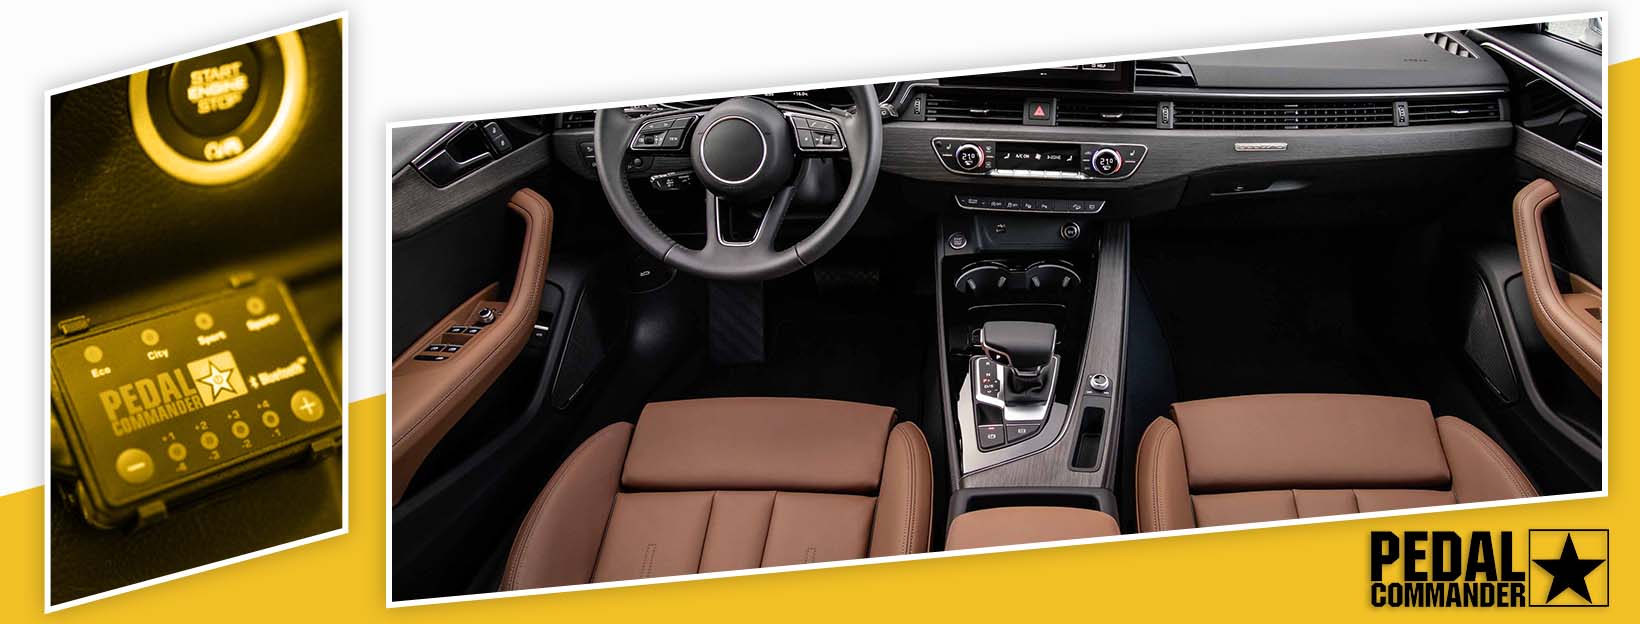 Pedal Commander for Audi A4 Allroad - interior